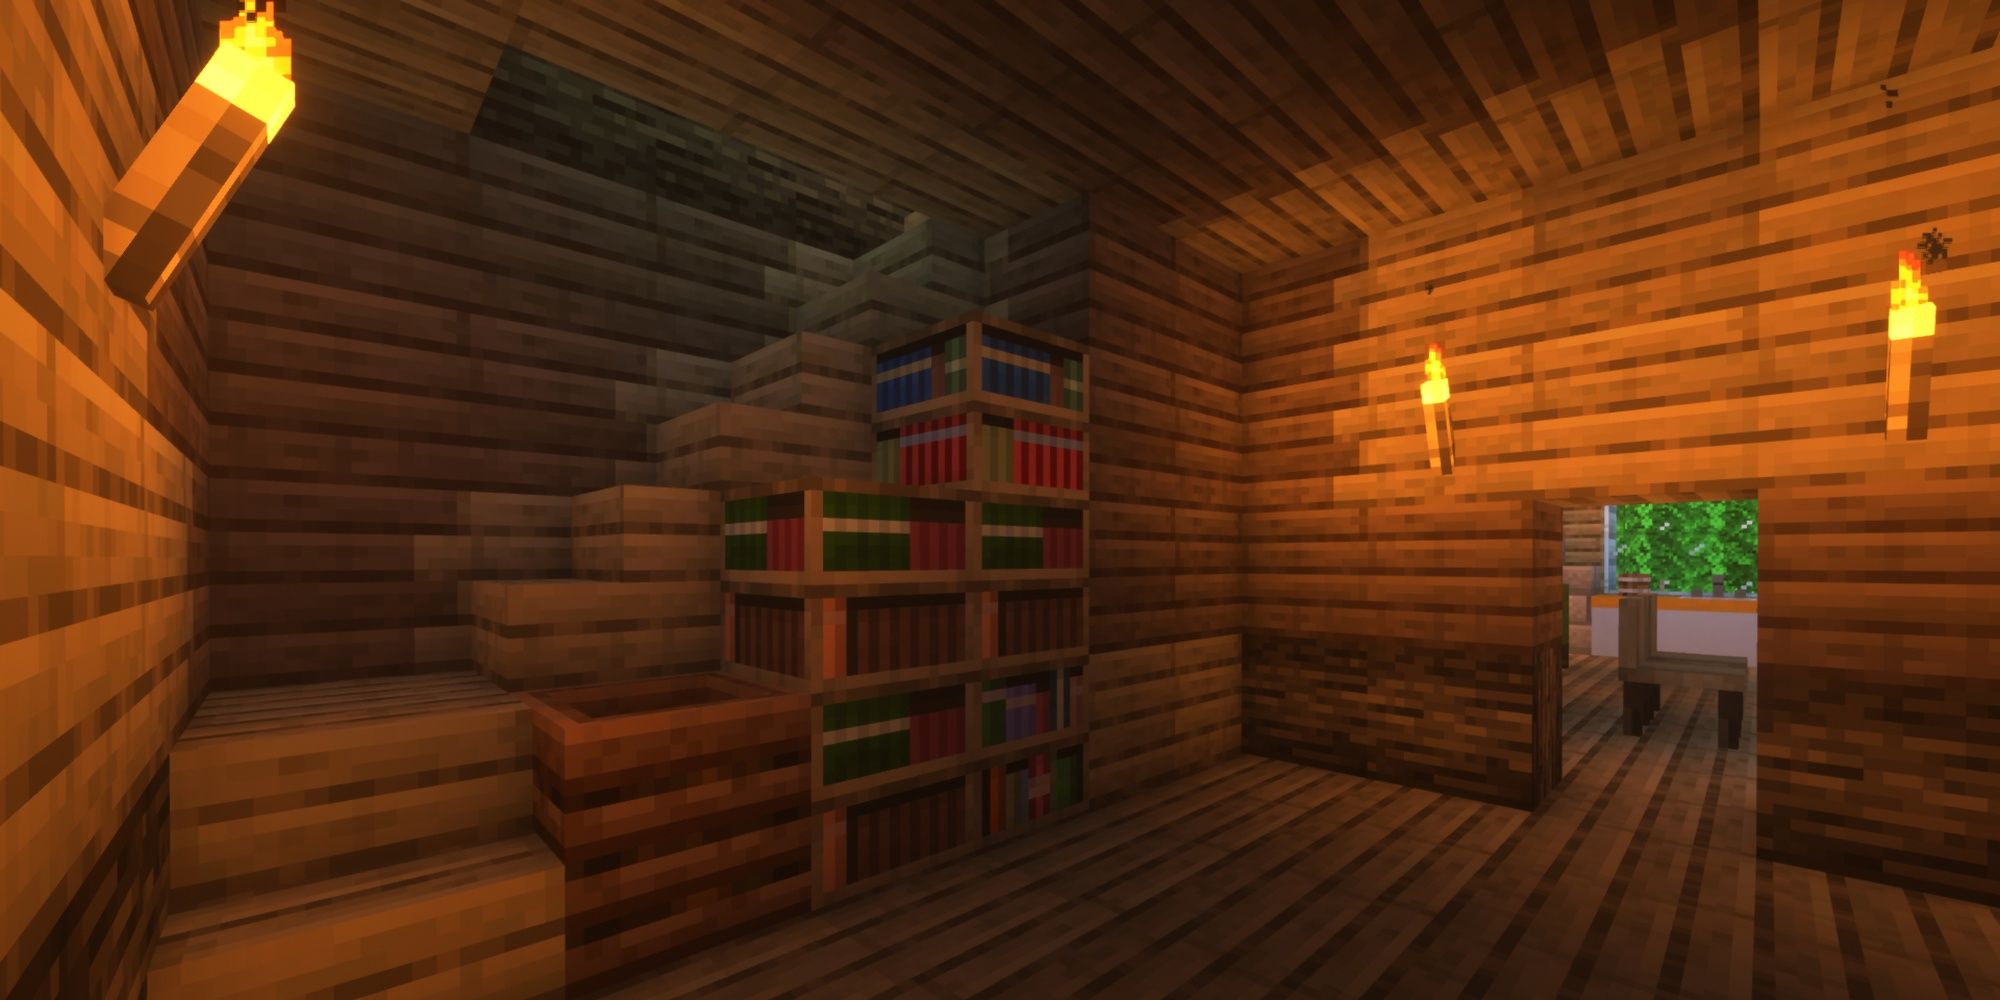 Minecraft bookshelves next to a staircase